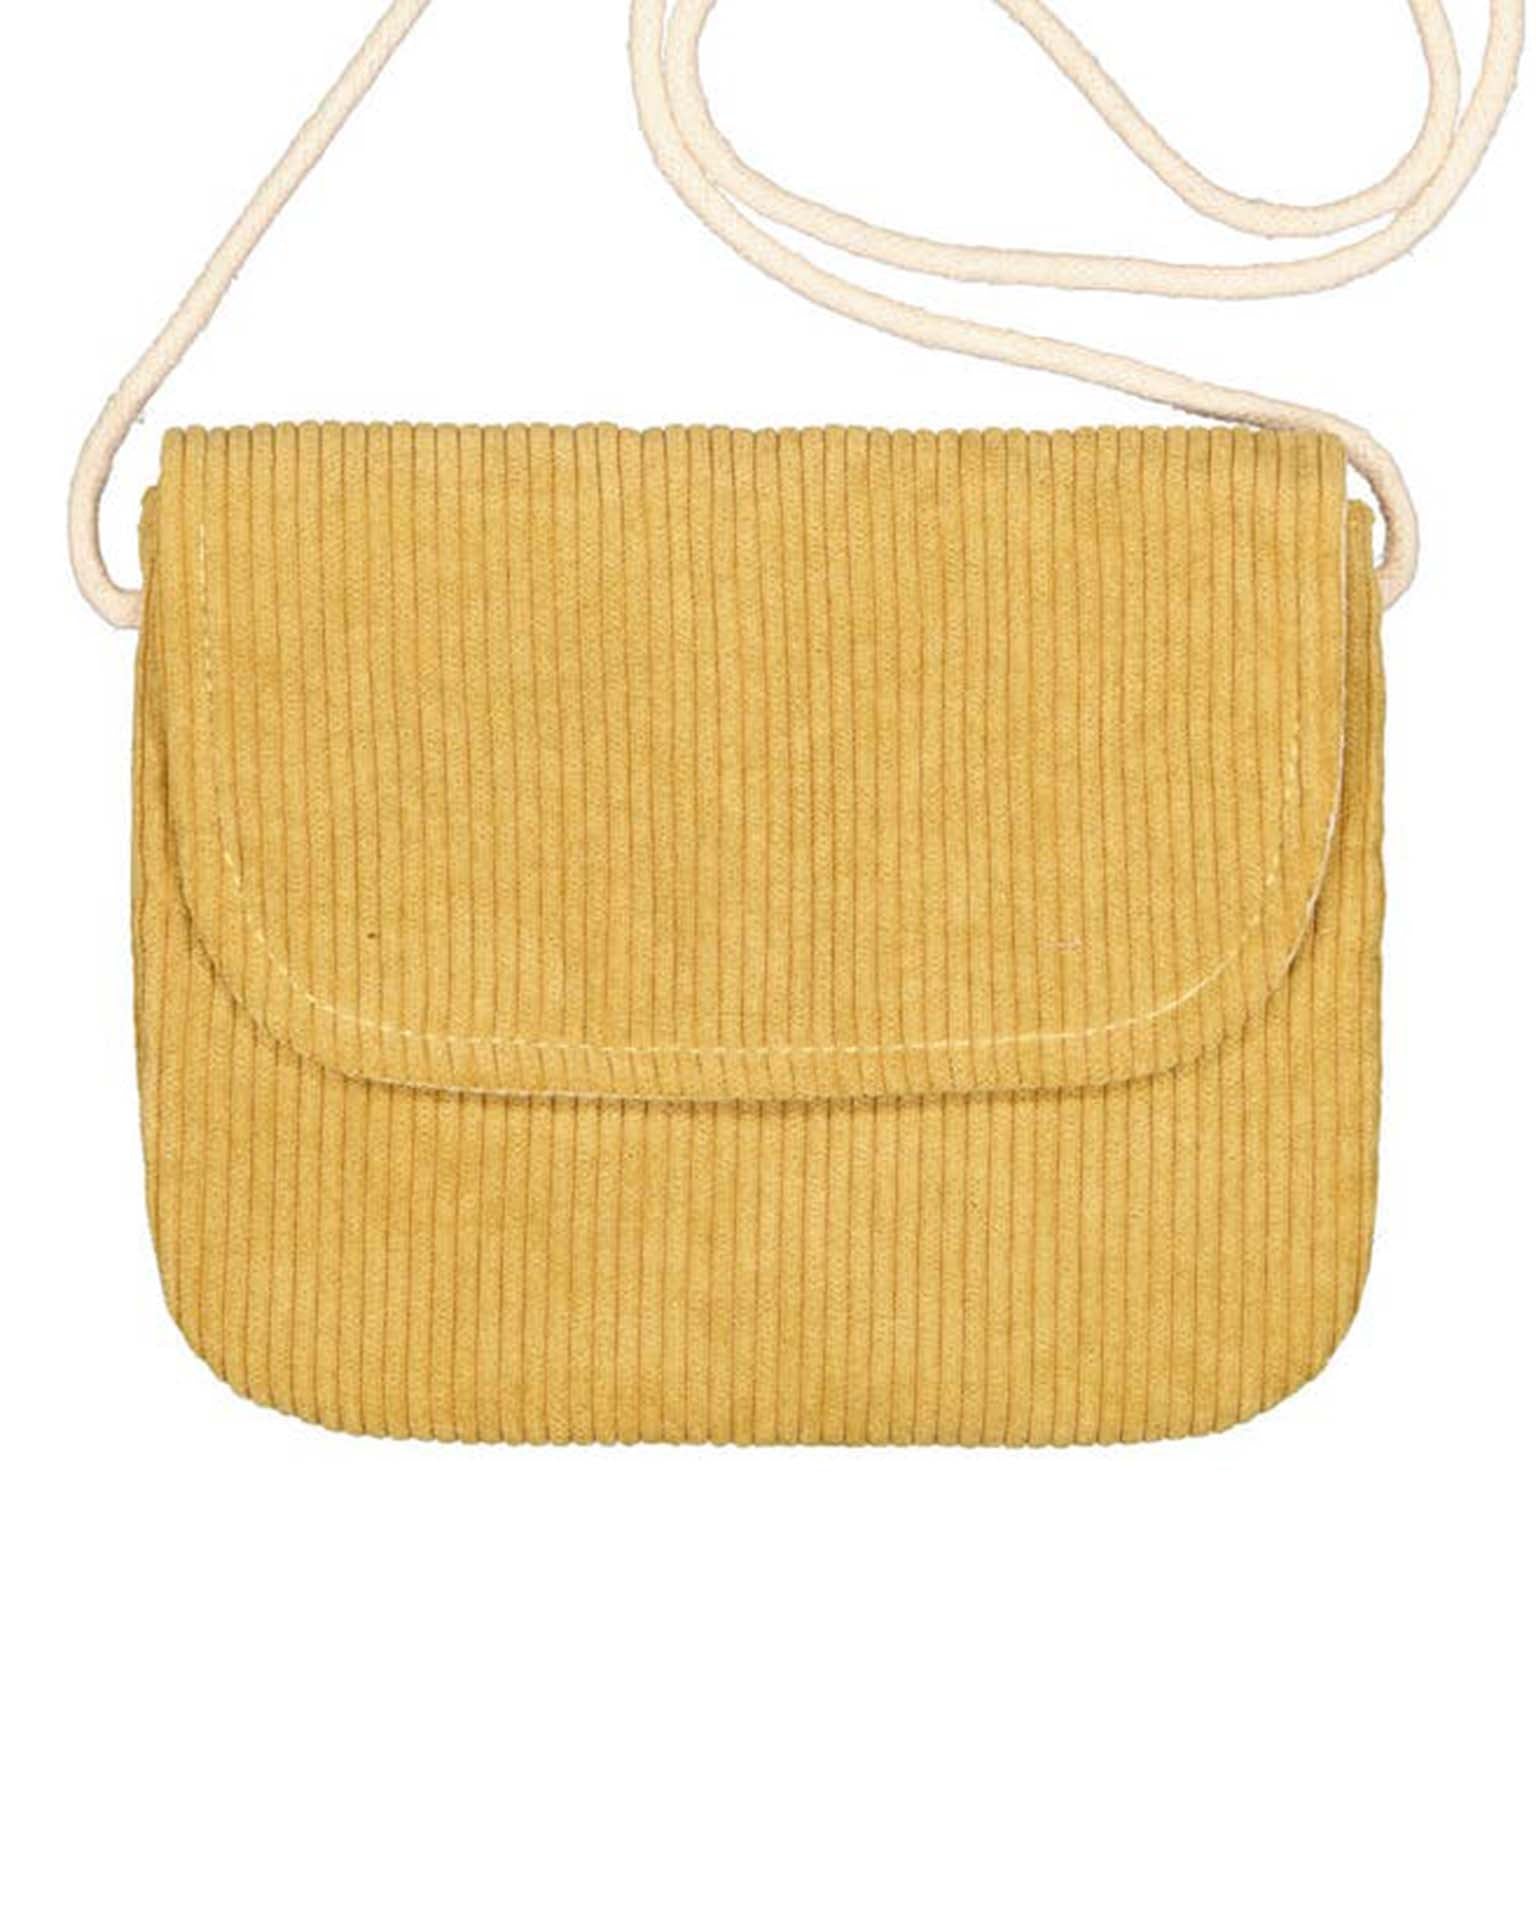 Little luciole et petit pois accessories corduroy purse in mustard